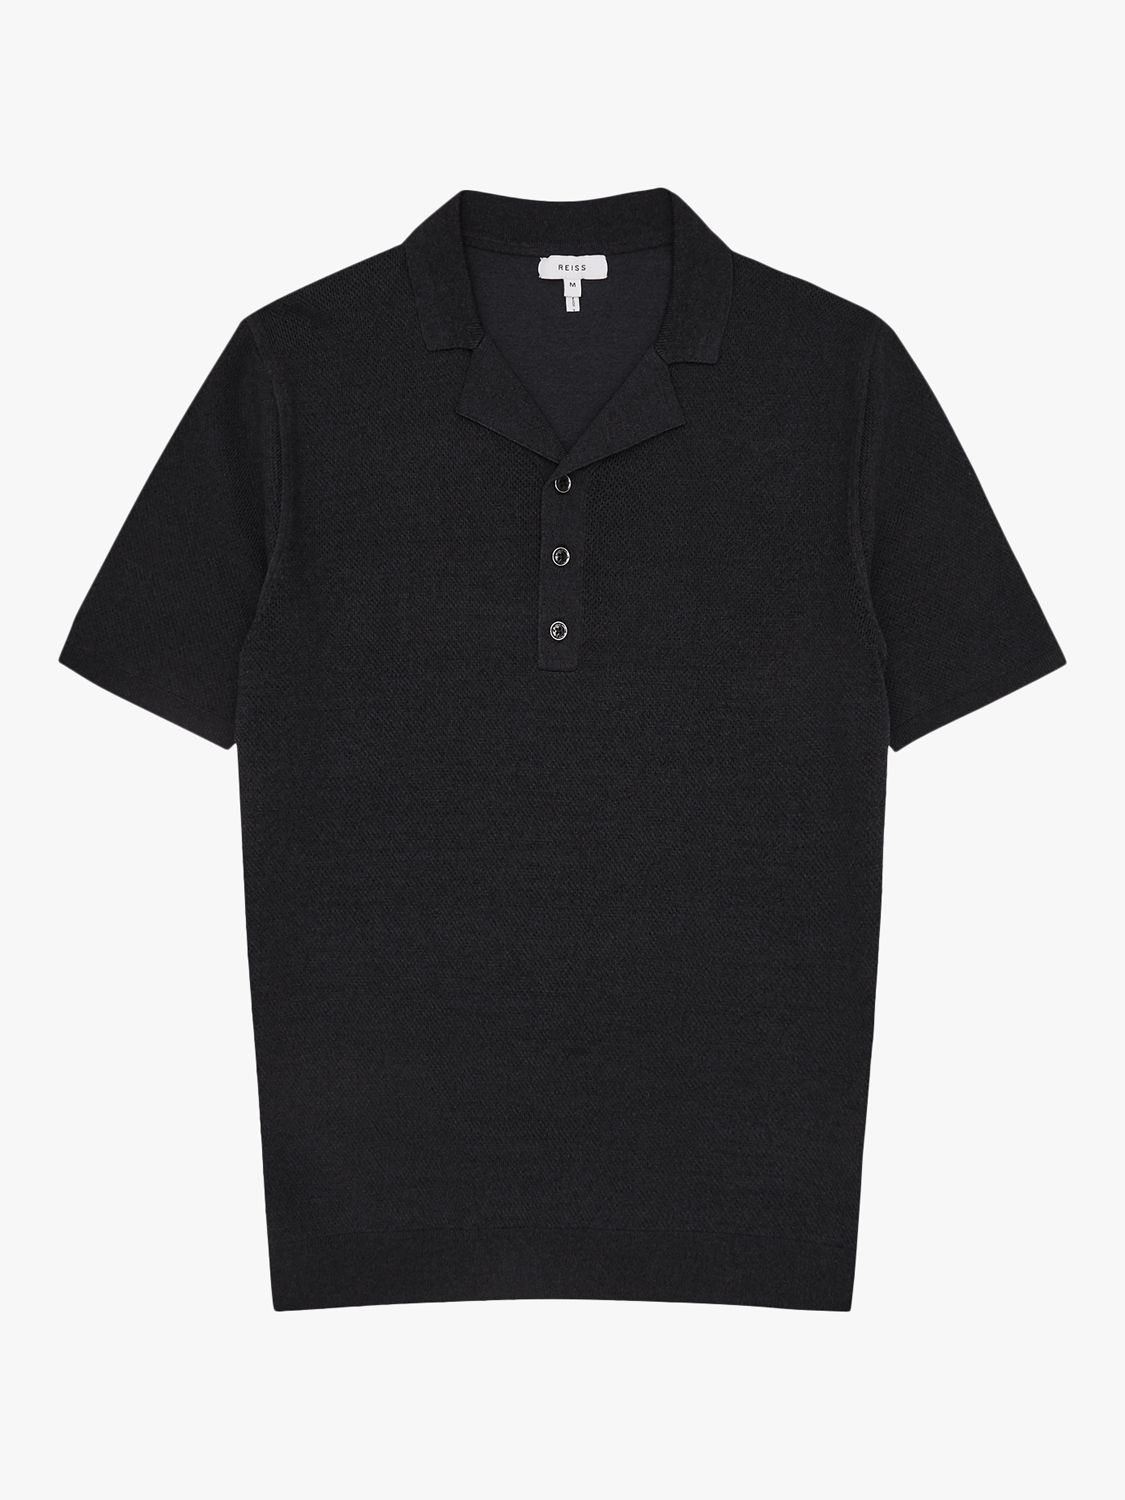 Reiss Hali Cuban Collar Polo Shirt, Black at John Lewis & Partners